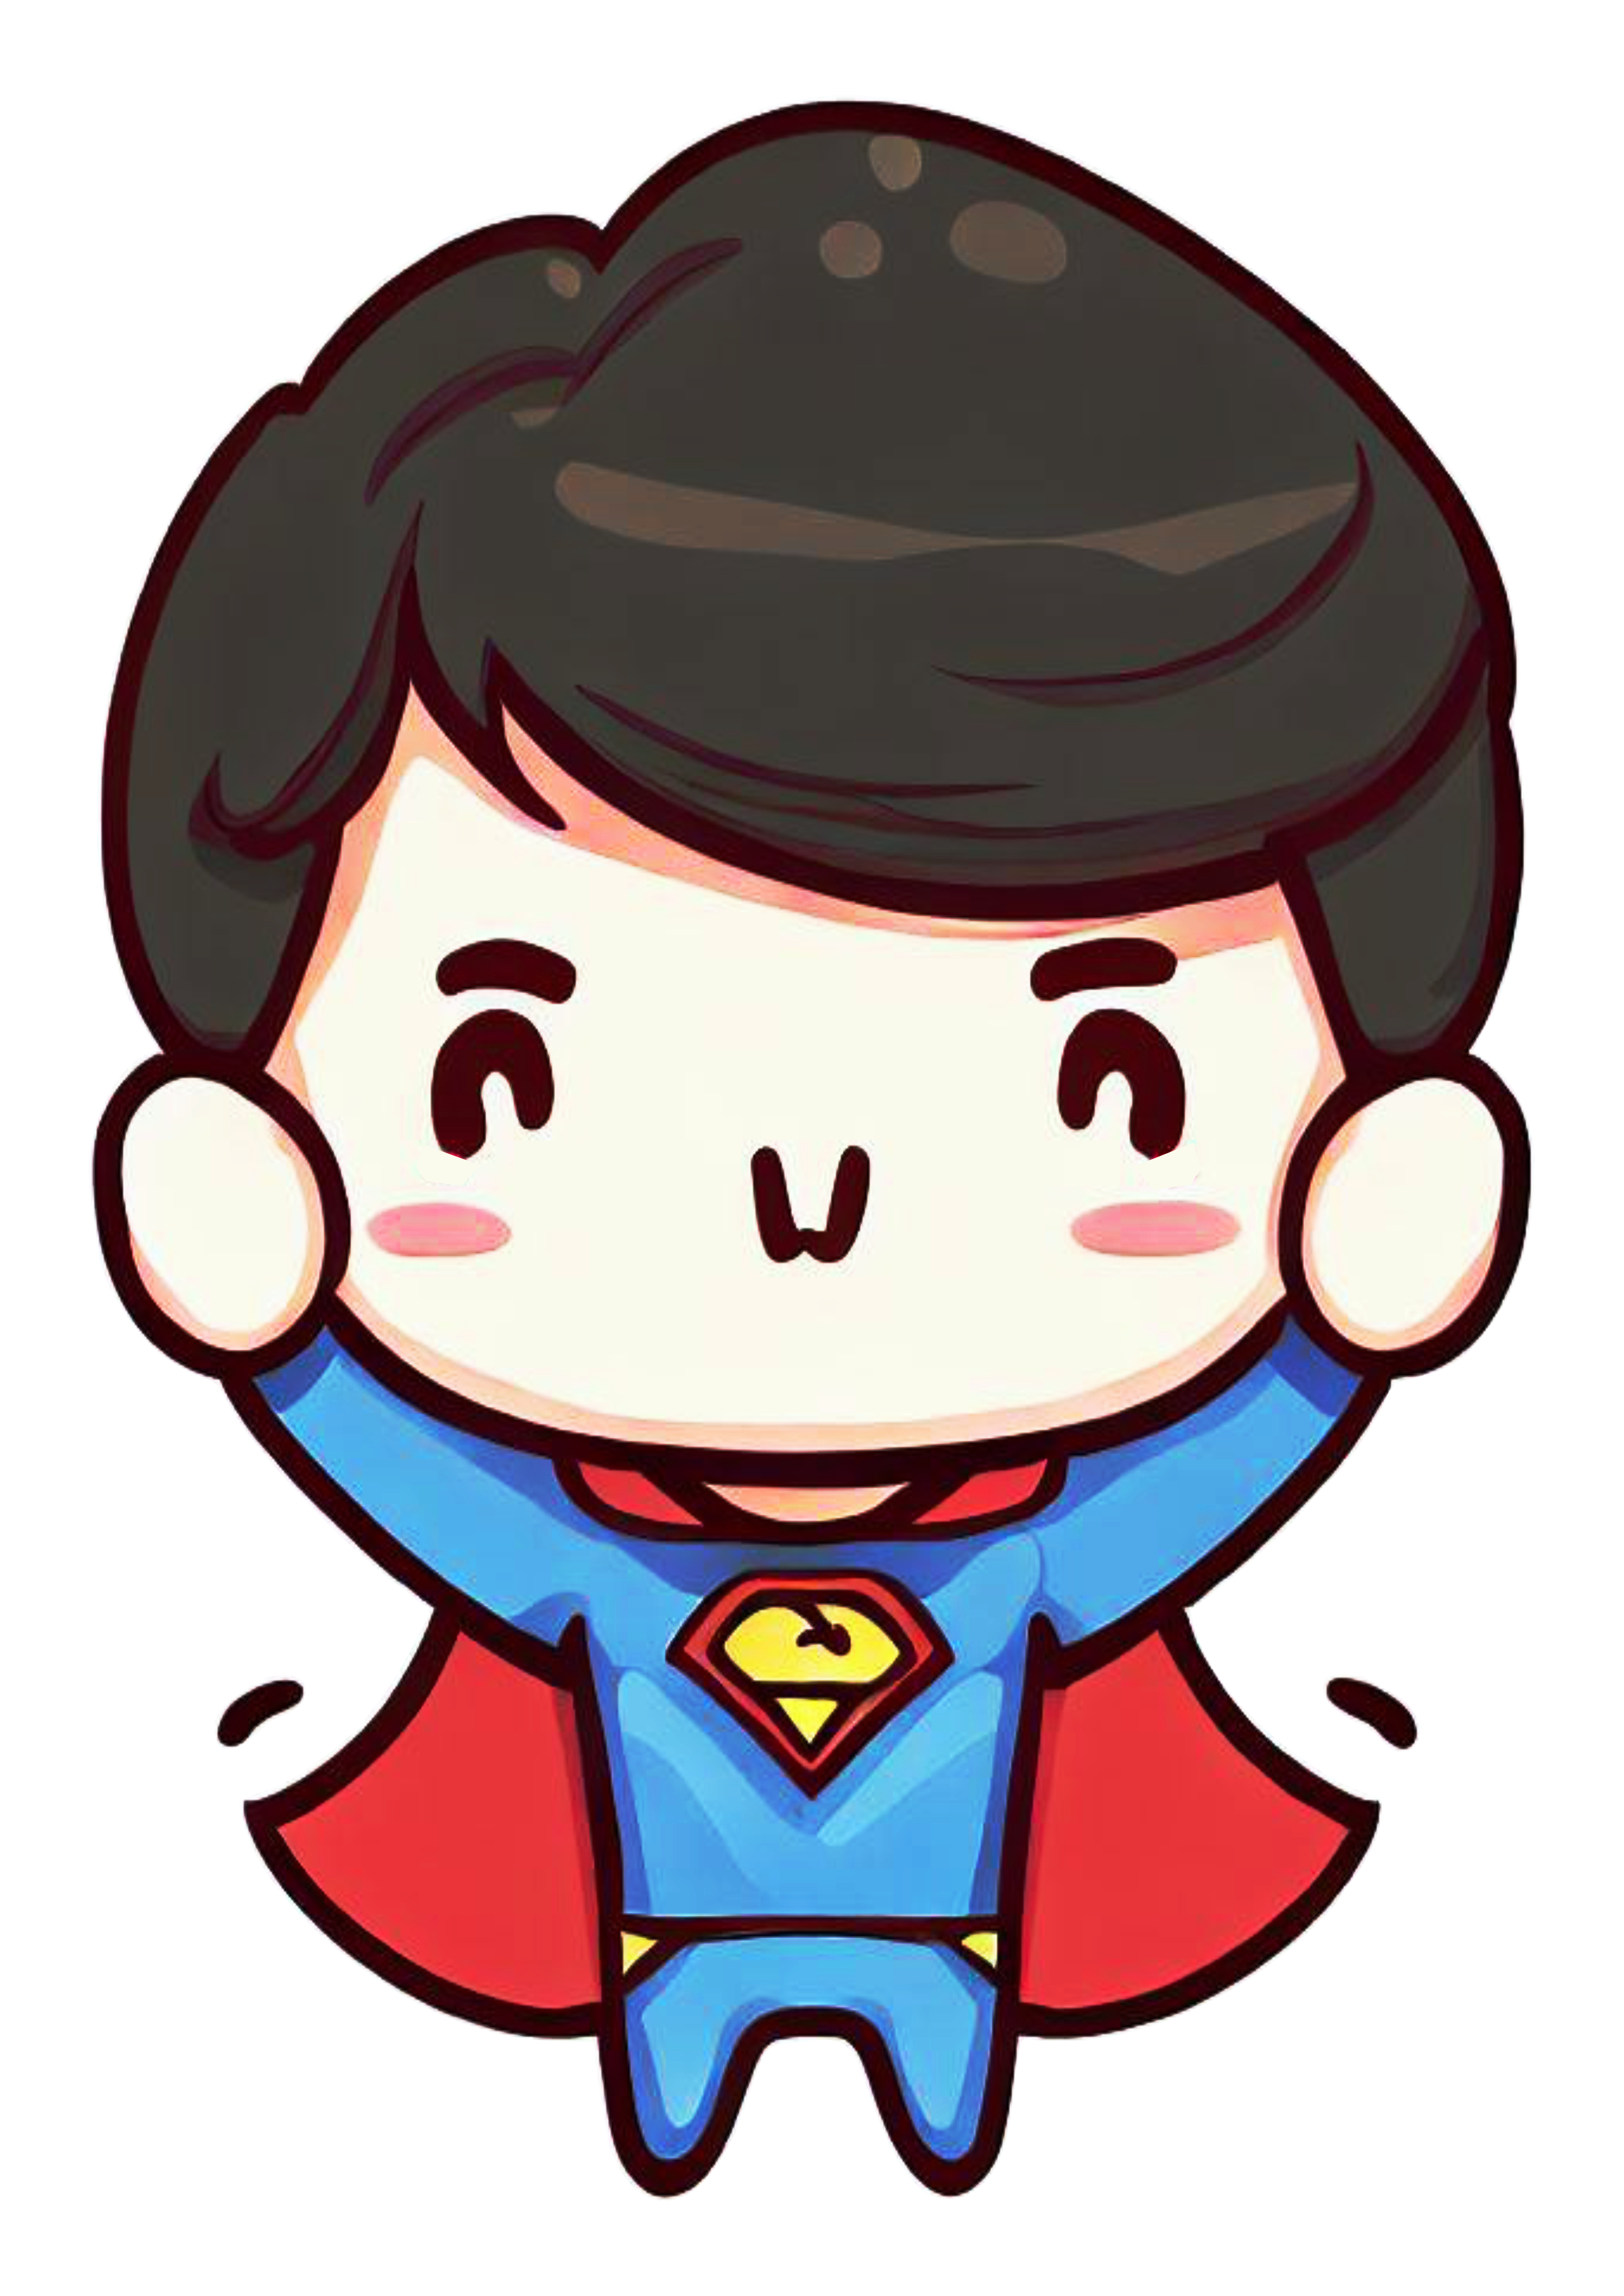 Super homem baby fofinho cute superman heroi fantasia infantil bonitinho ilustração png